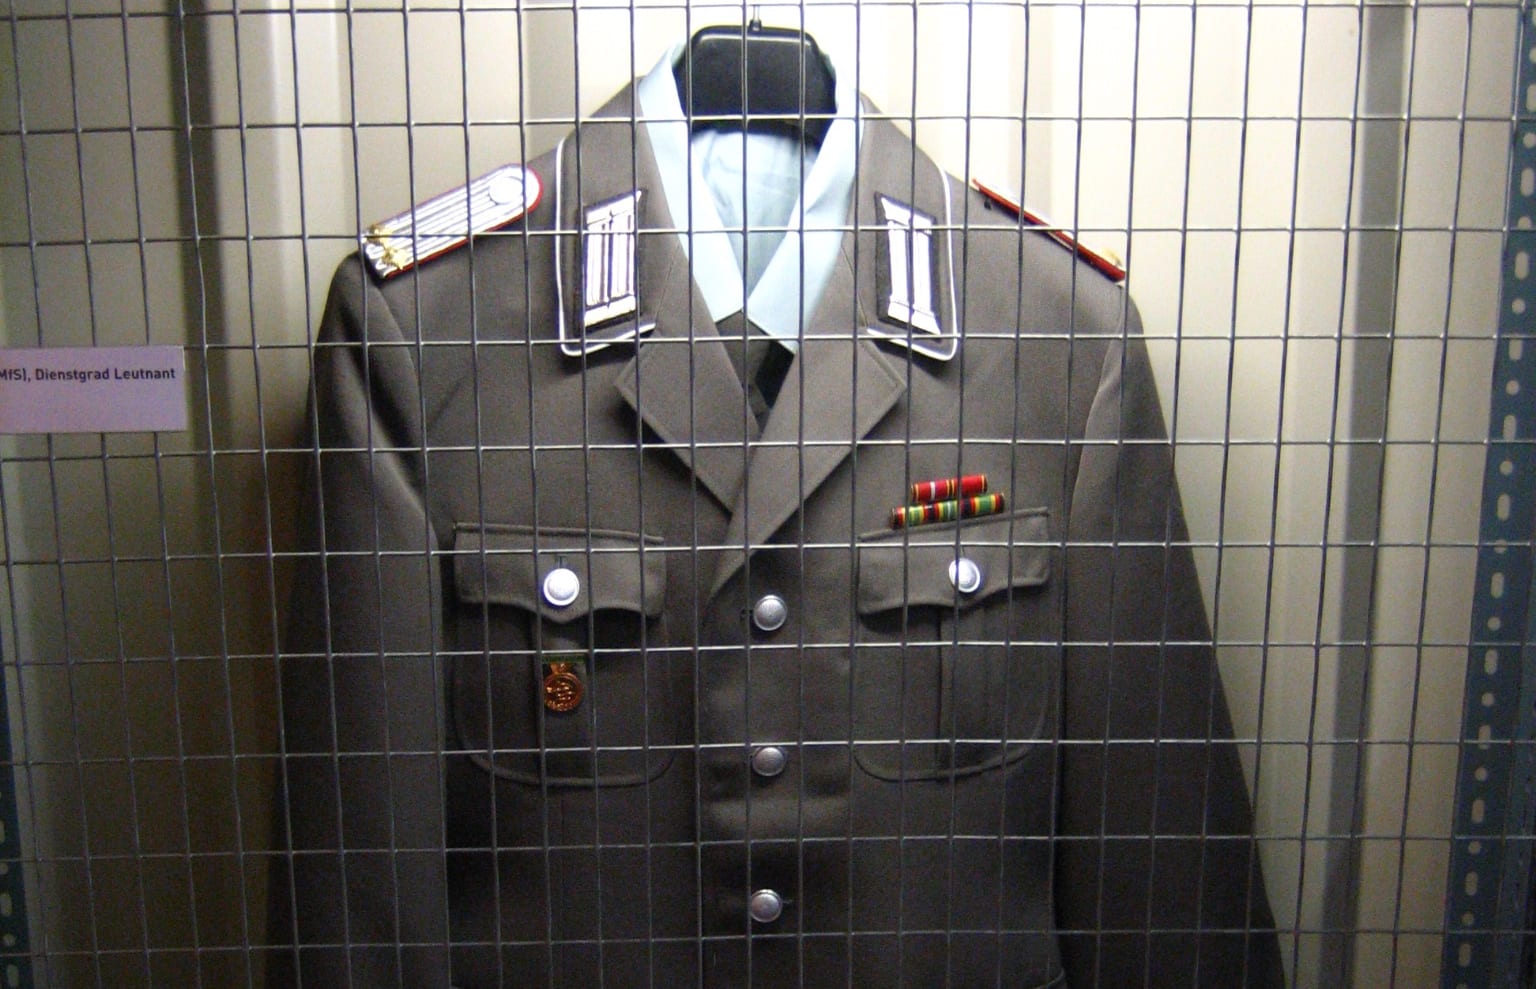 A Stasi uniform